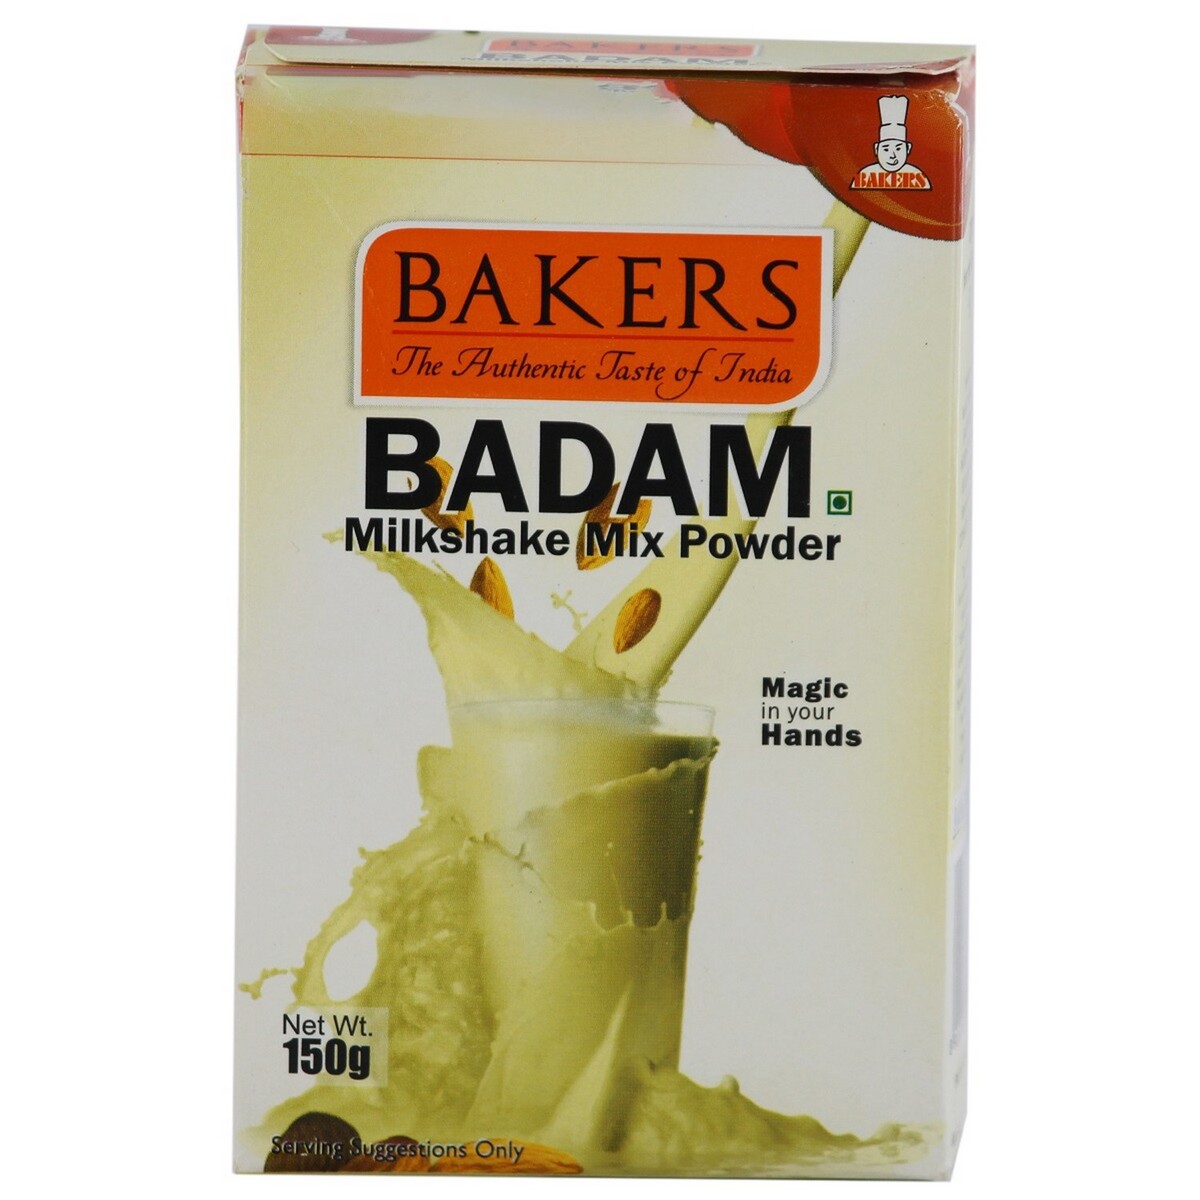 Bakers Badam Milk Shake Mix Powder 100g